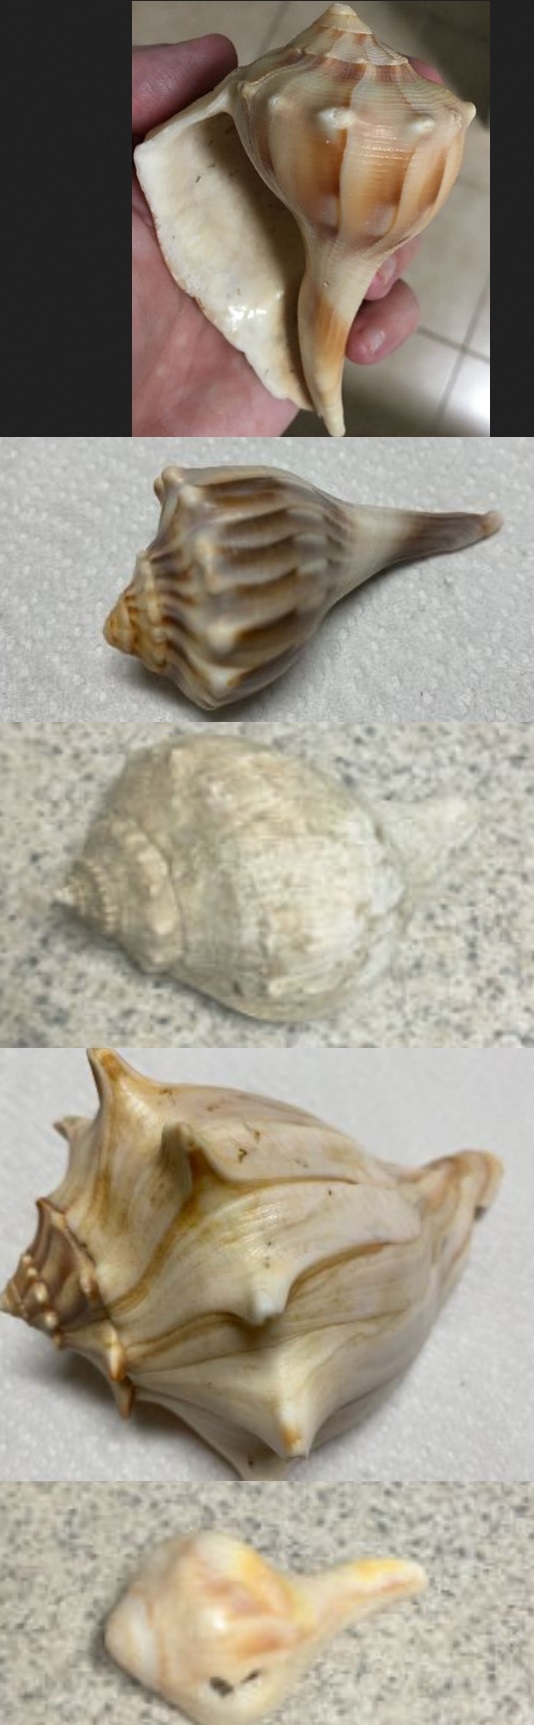 Whelk shell examples